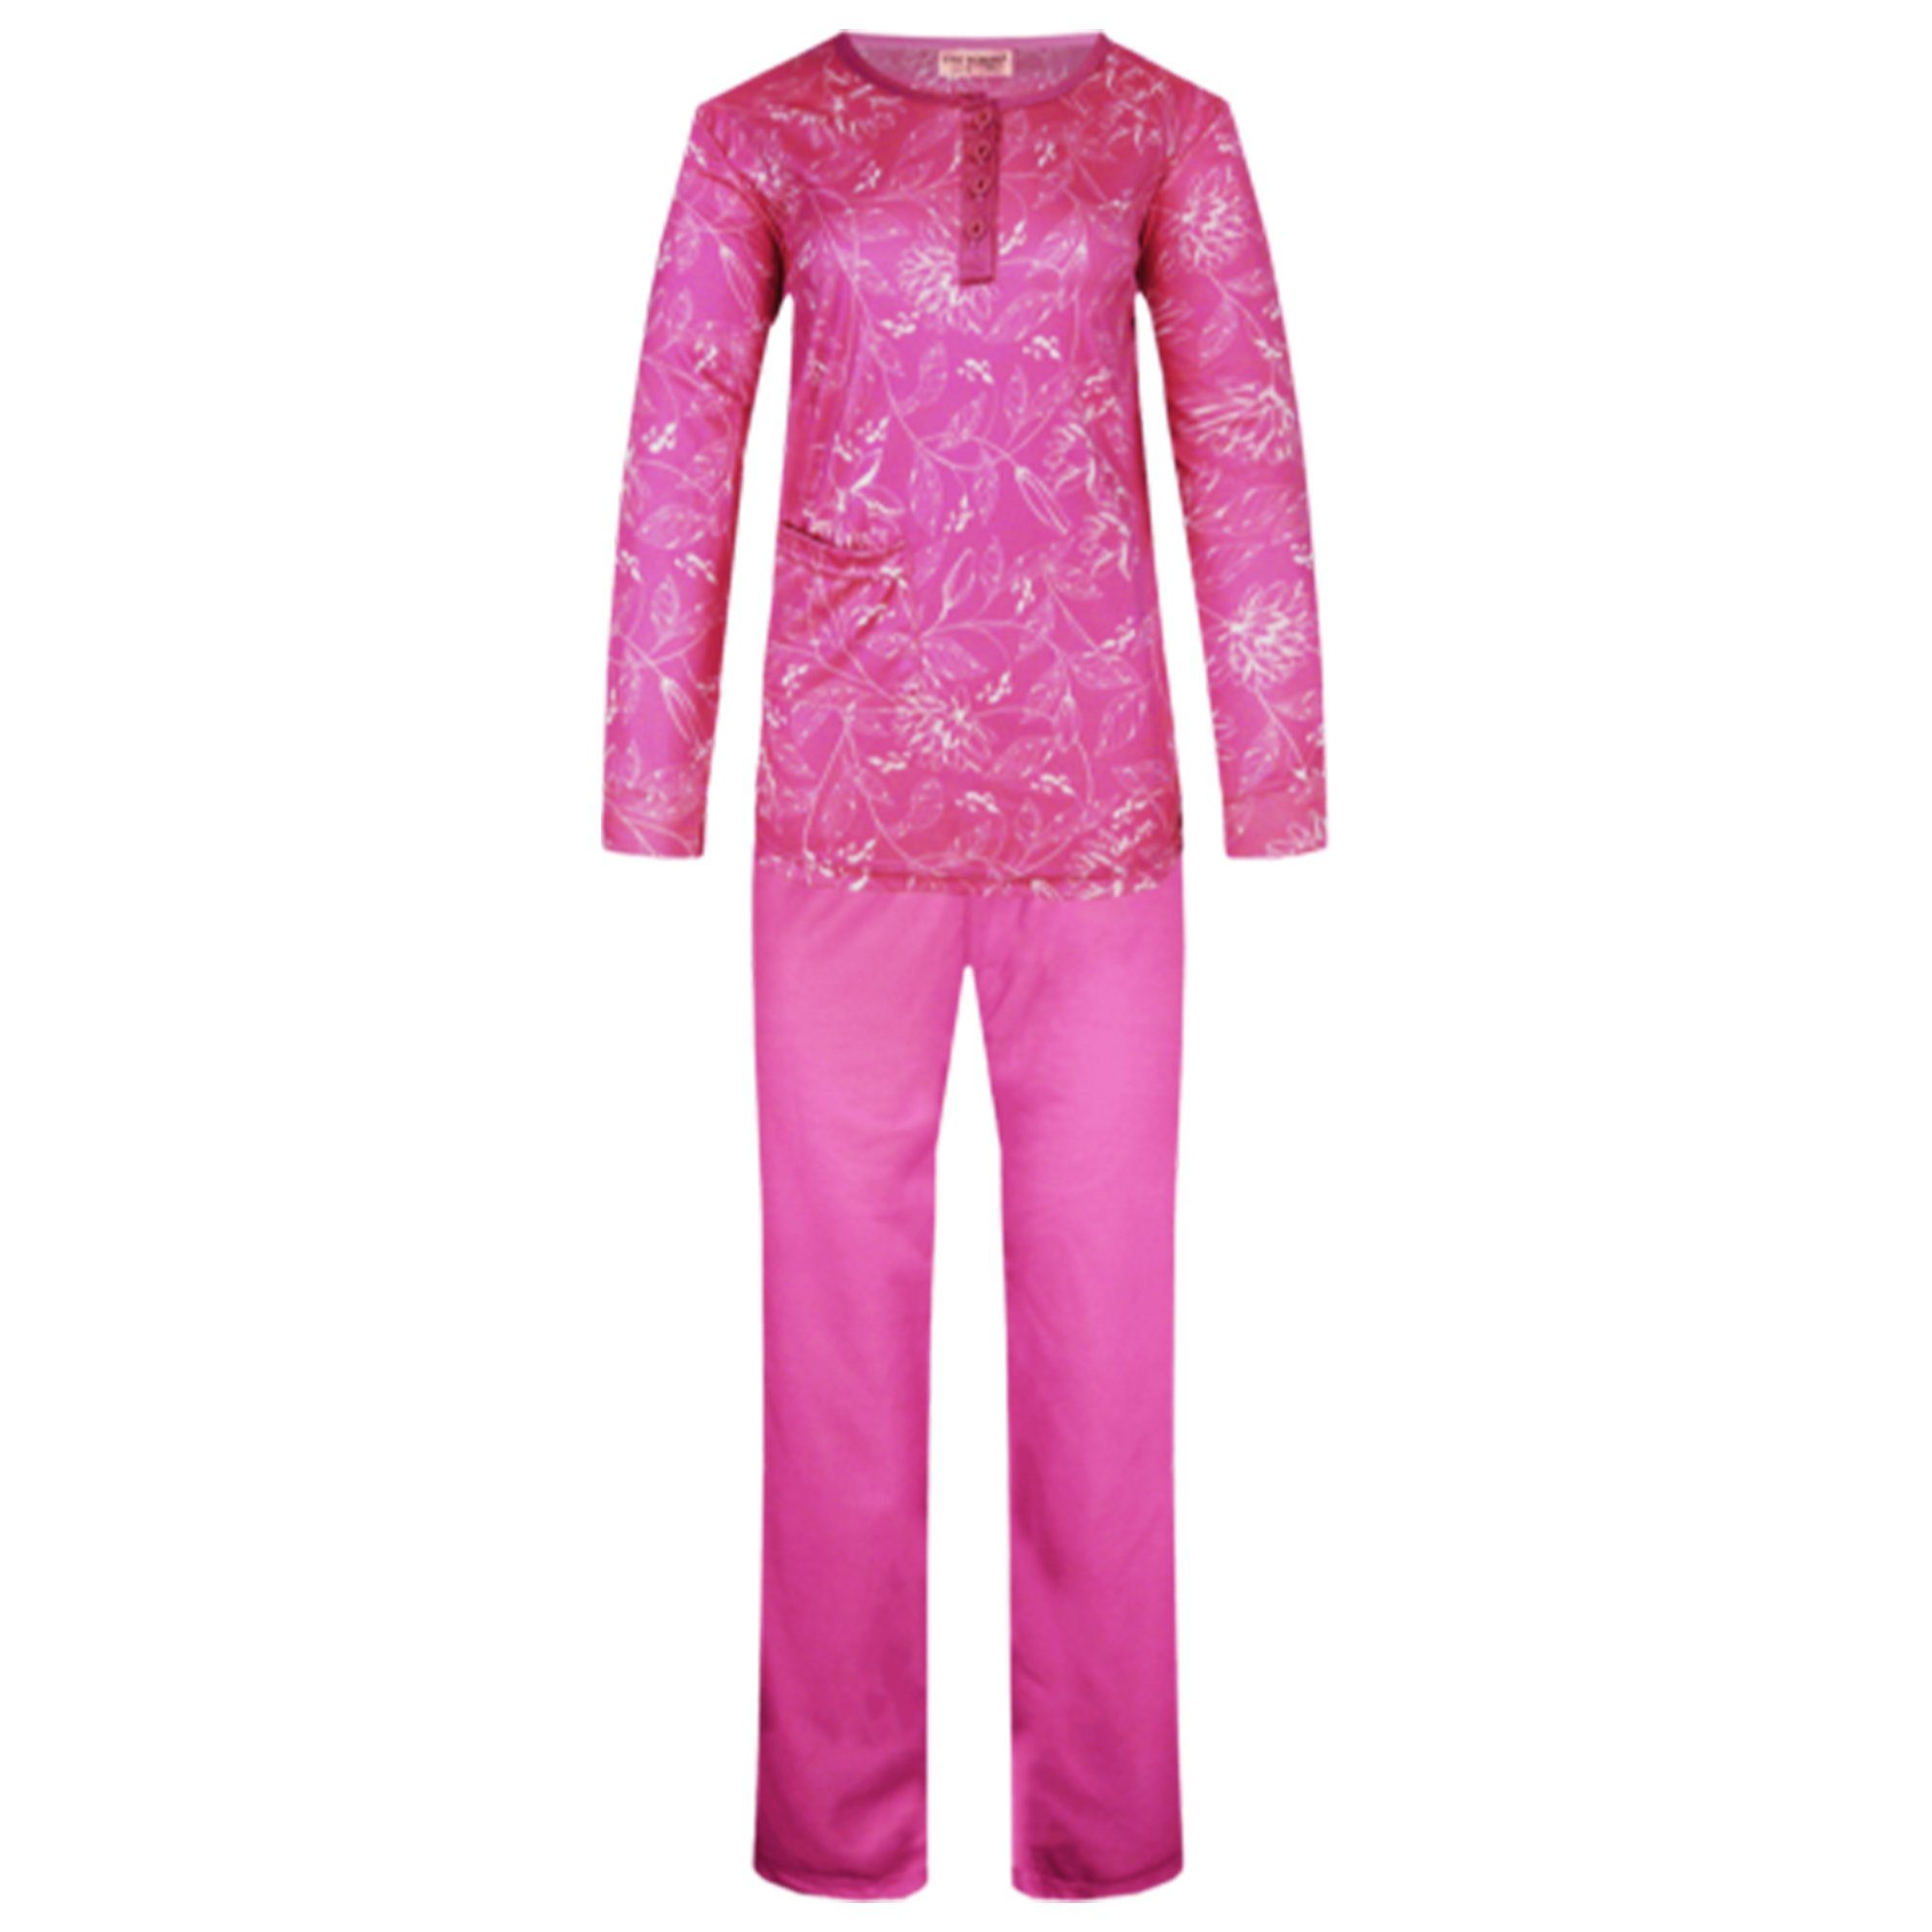 TEXEMP Pyjama Damen Schlafanzug Lang Rot Langarm (Set) 90% Nachtwäsche Baumwolle Baumwolle Pyjama Set